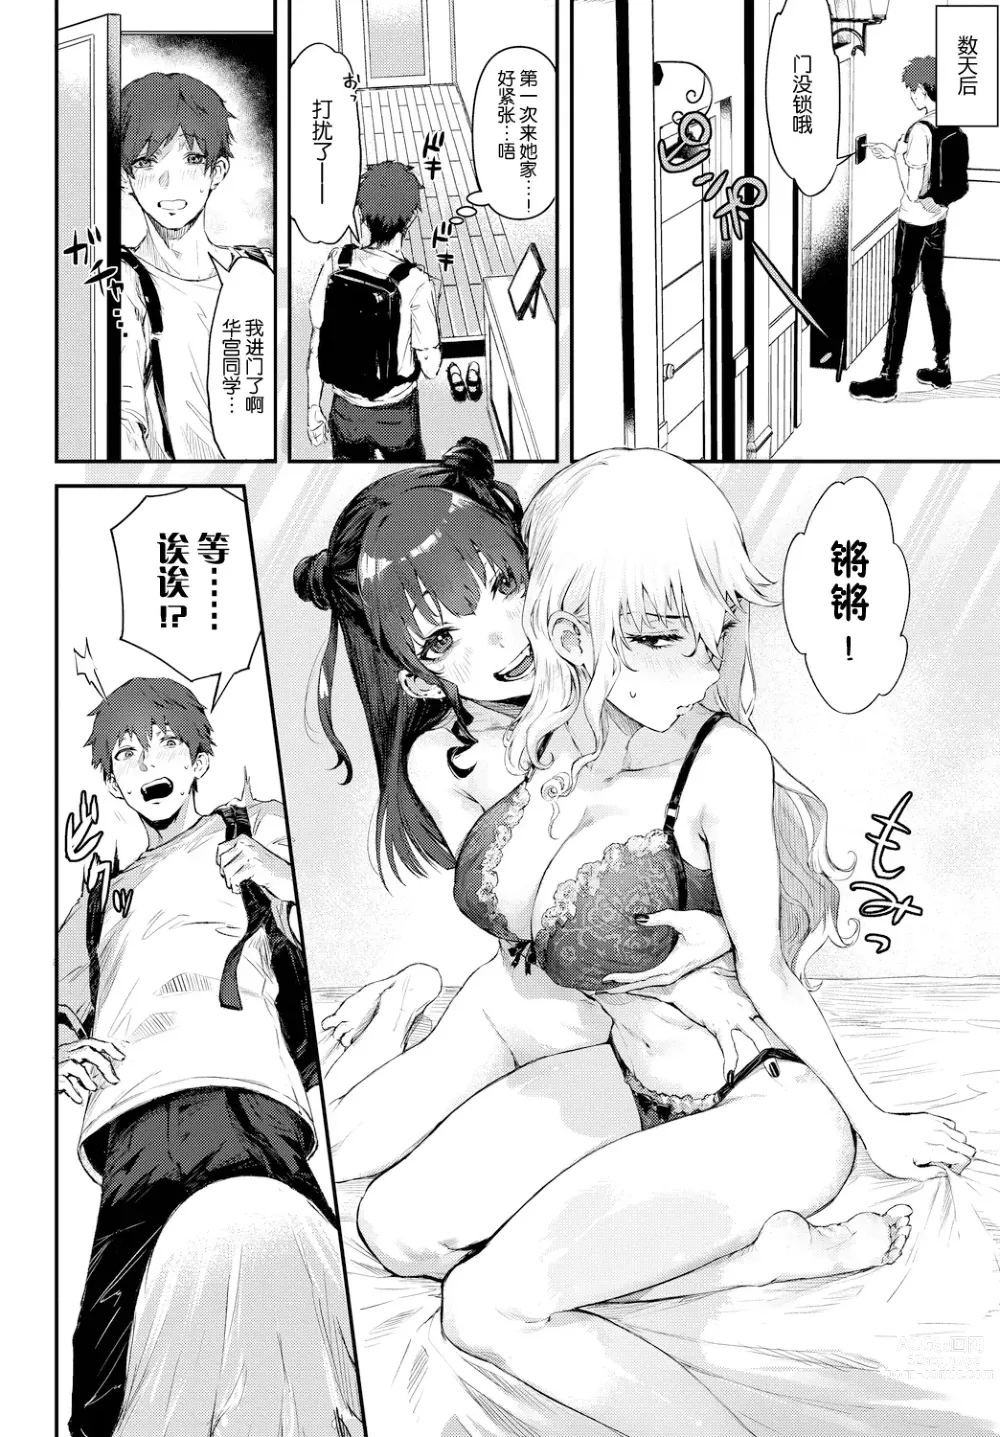 Page 6 of manga Tsuyogari Complex